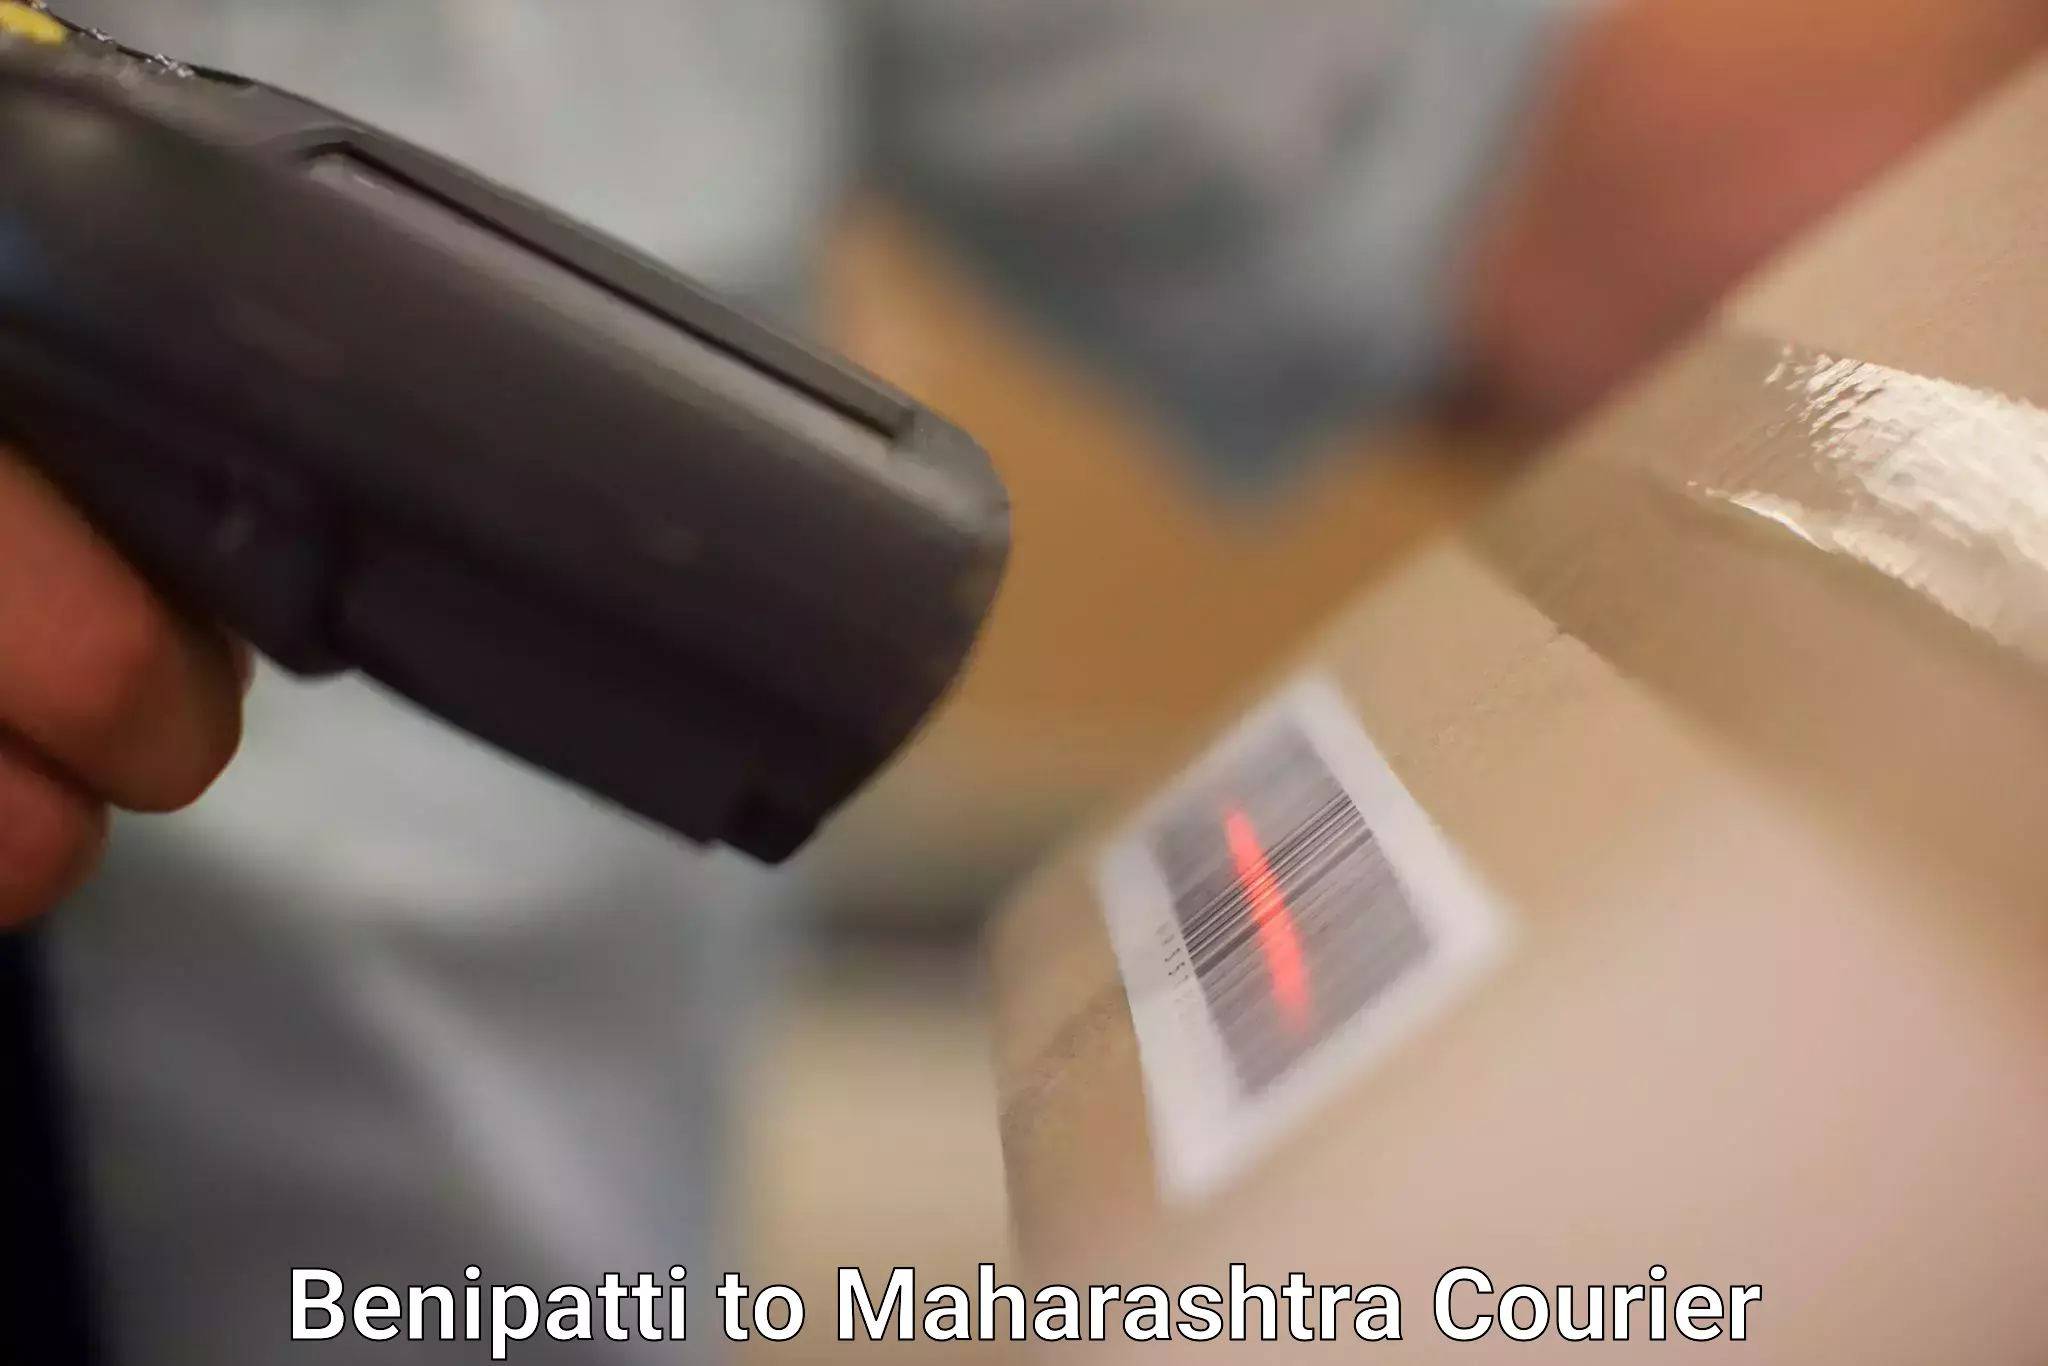 Express delivery capabilities Benipatti to IIT Mumbai